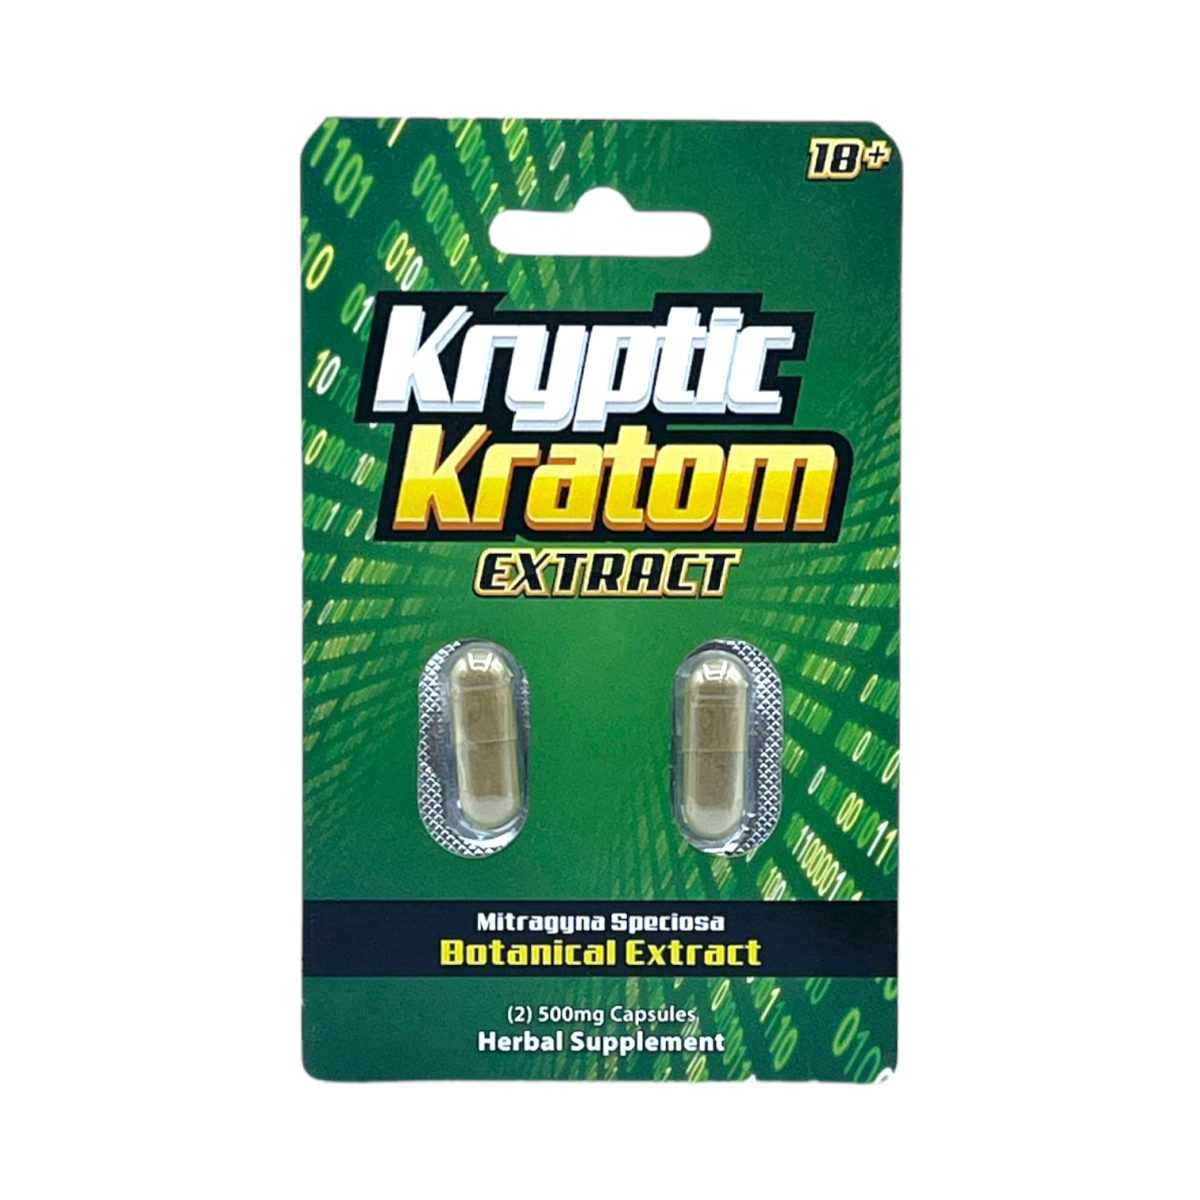 Kryptic Kratom Extract Capsules, 2 count